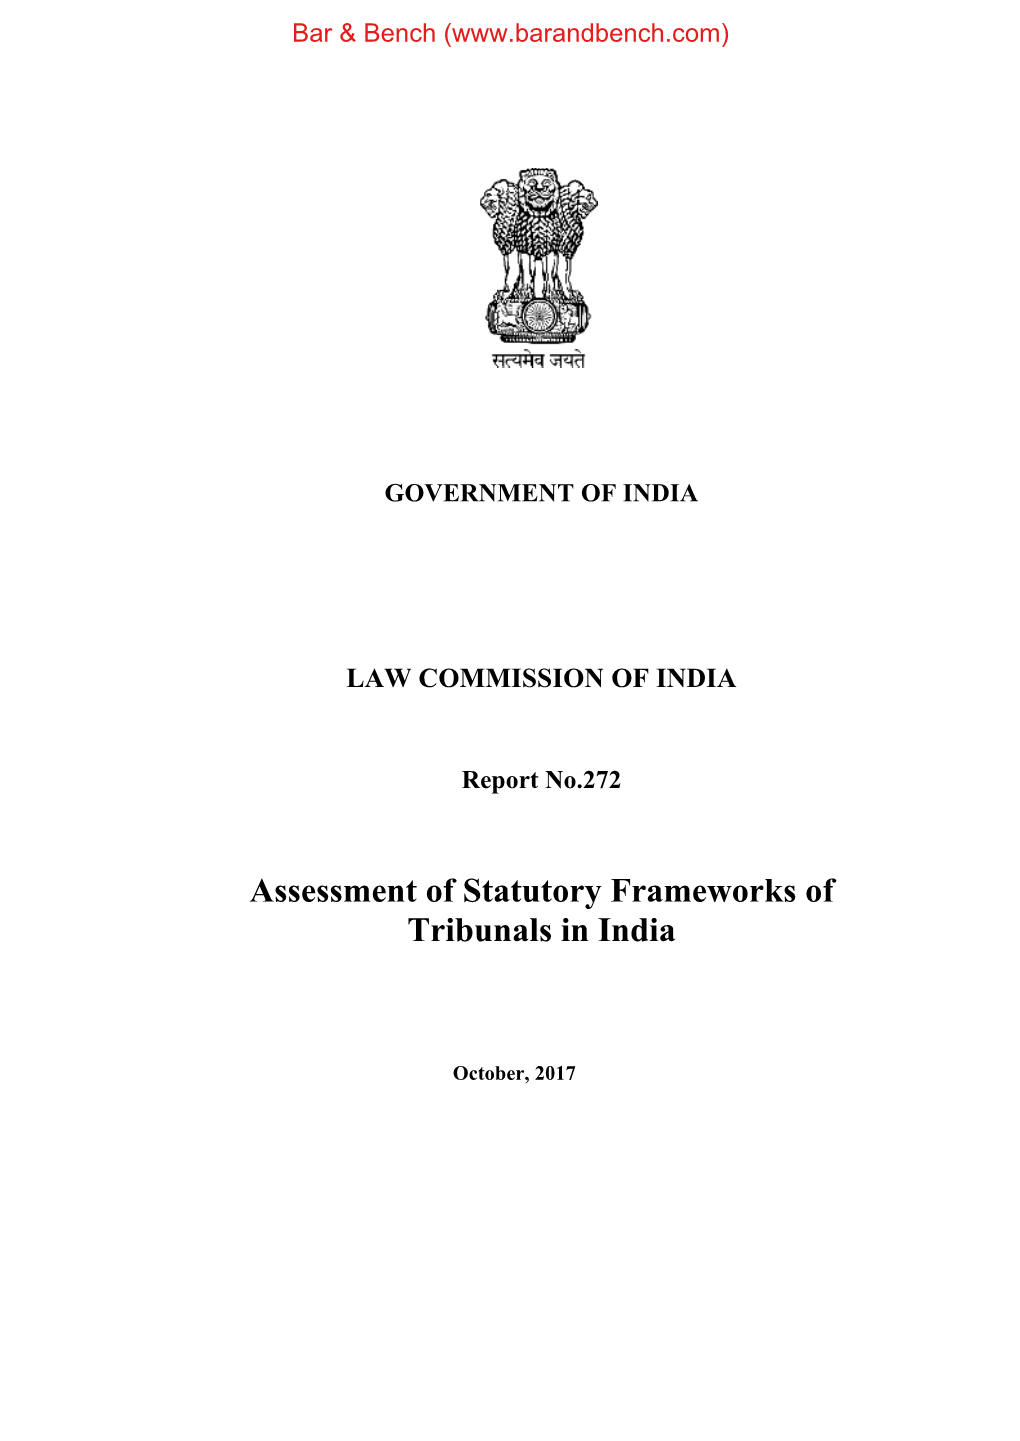 Assessment of Statutory Frameworks of Tribunals in India